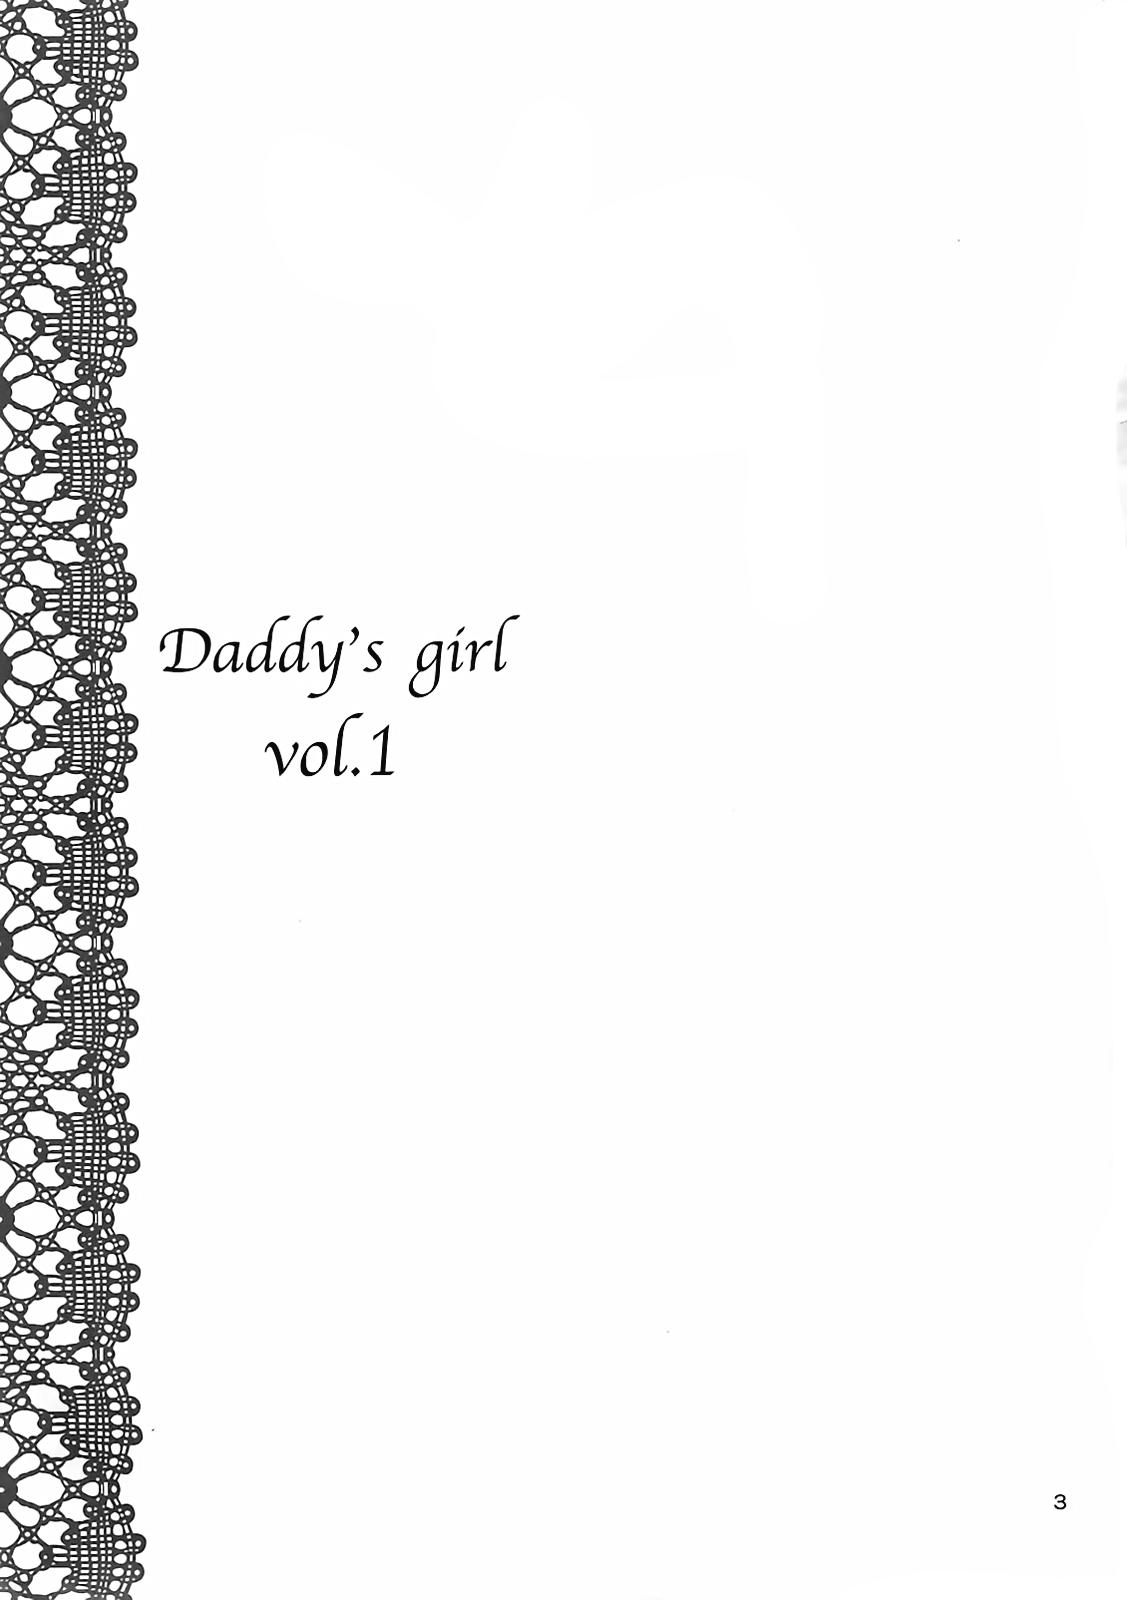 DG - Daddy's Girl Vol. 1 3